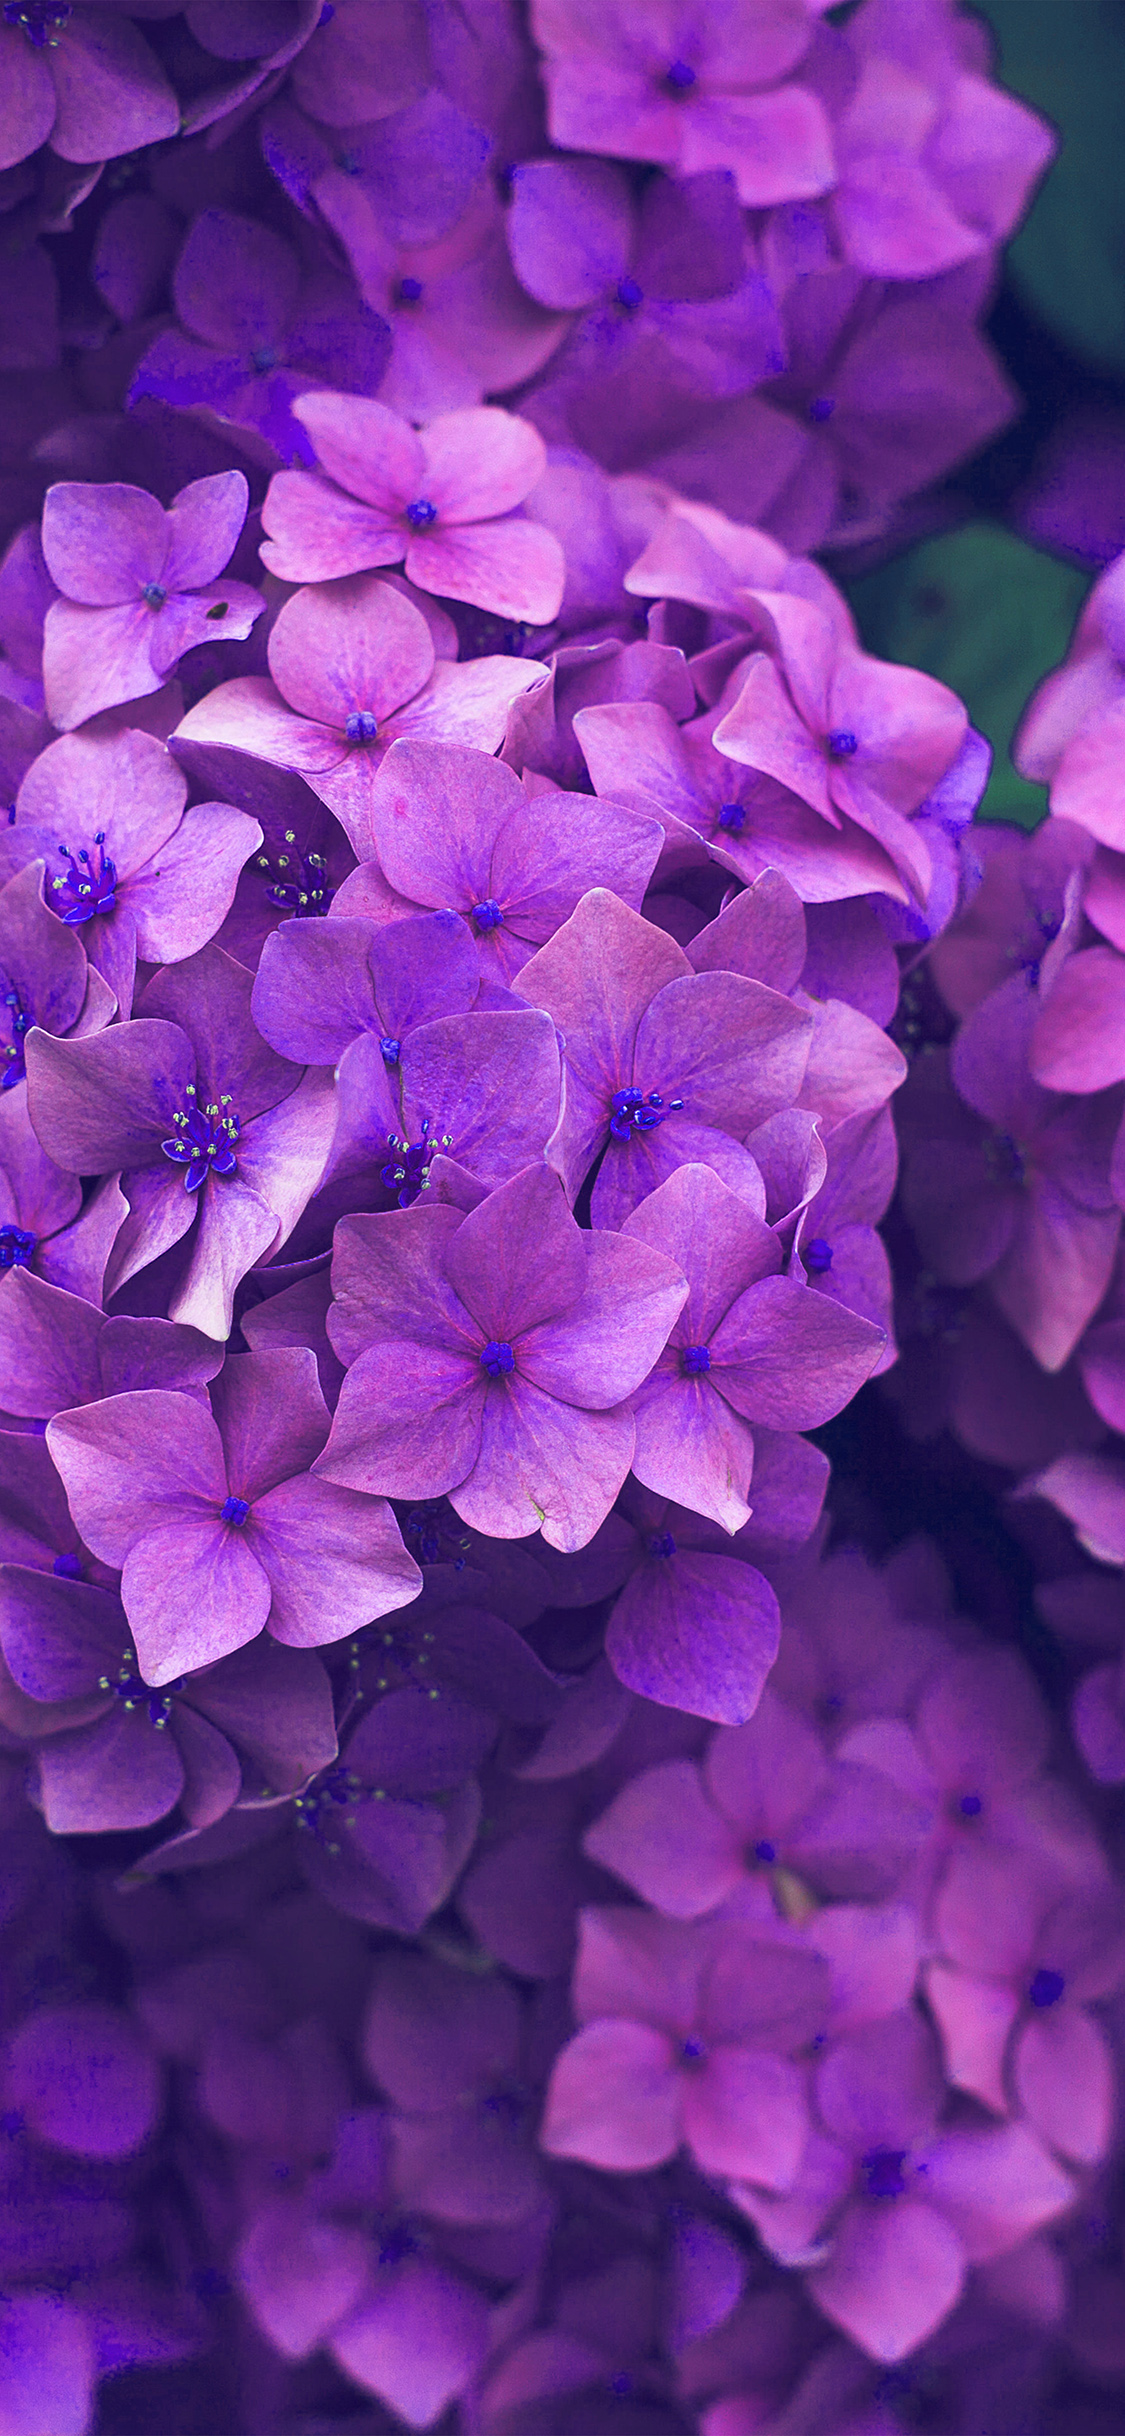 iPhone X wallpaper. flower spring pink purple nature